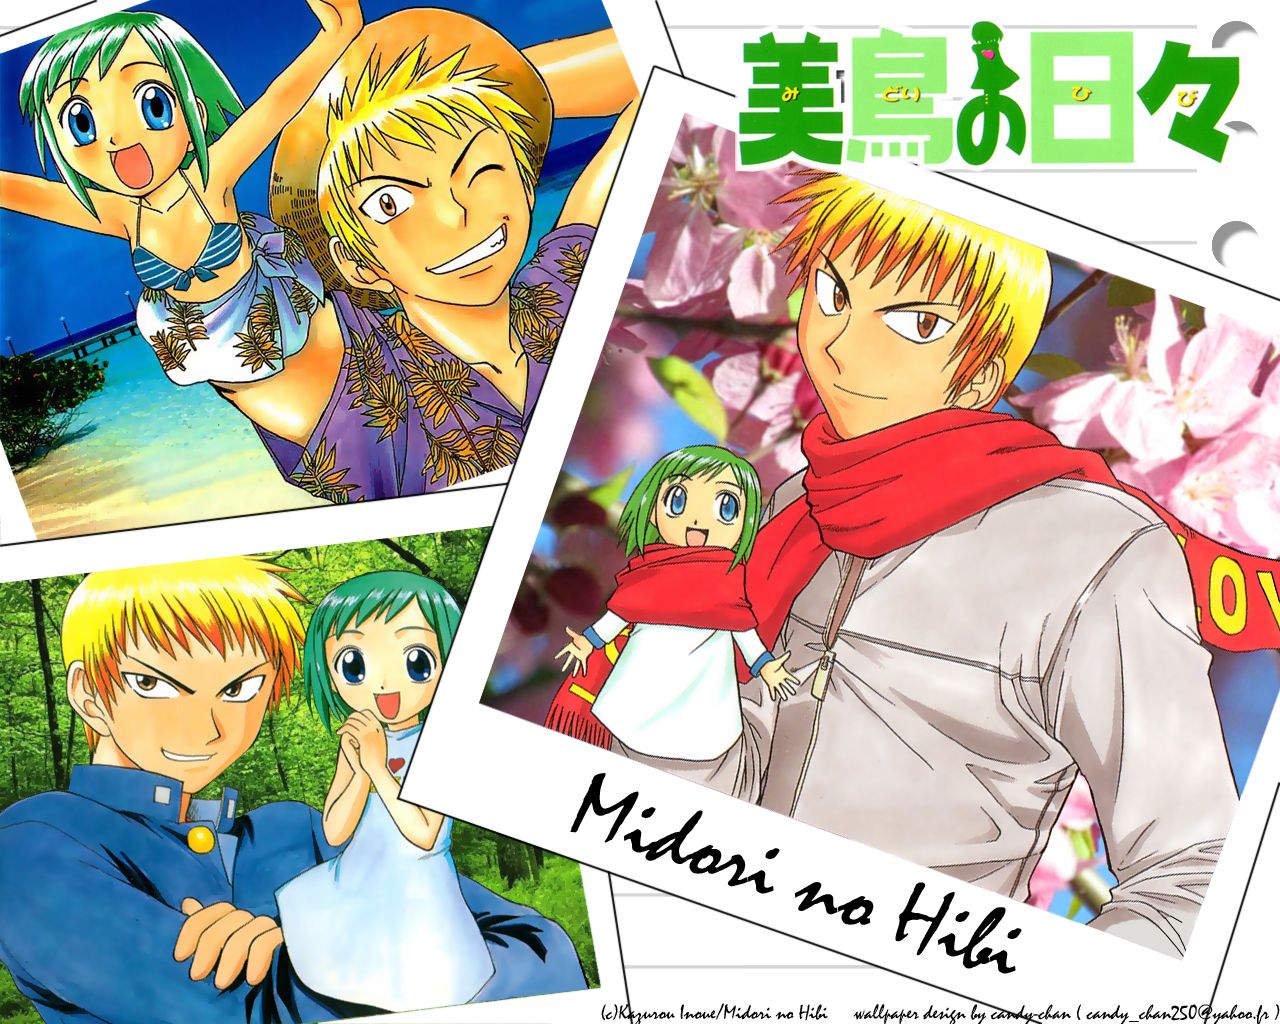 Midori no Hibi (Midori Days) Wallpaper #1081692 - Zerochan Anime Image Board